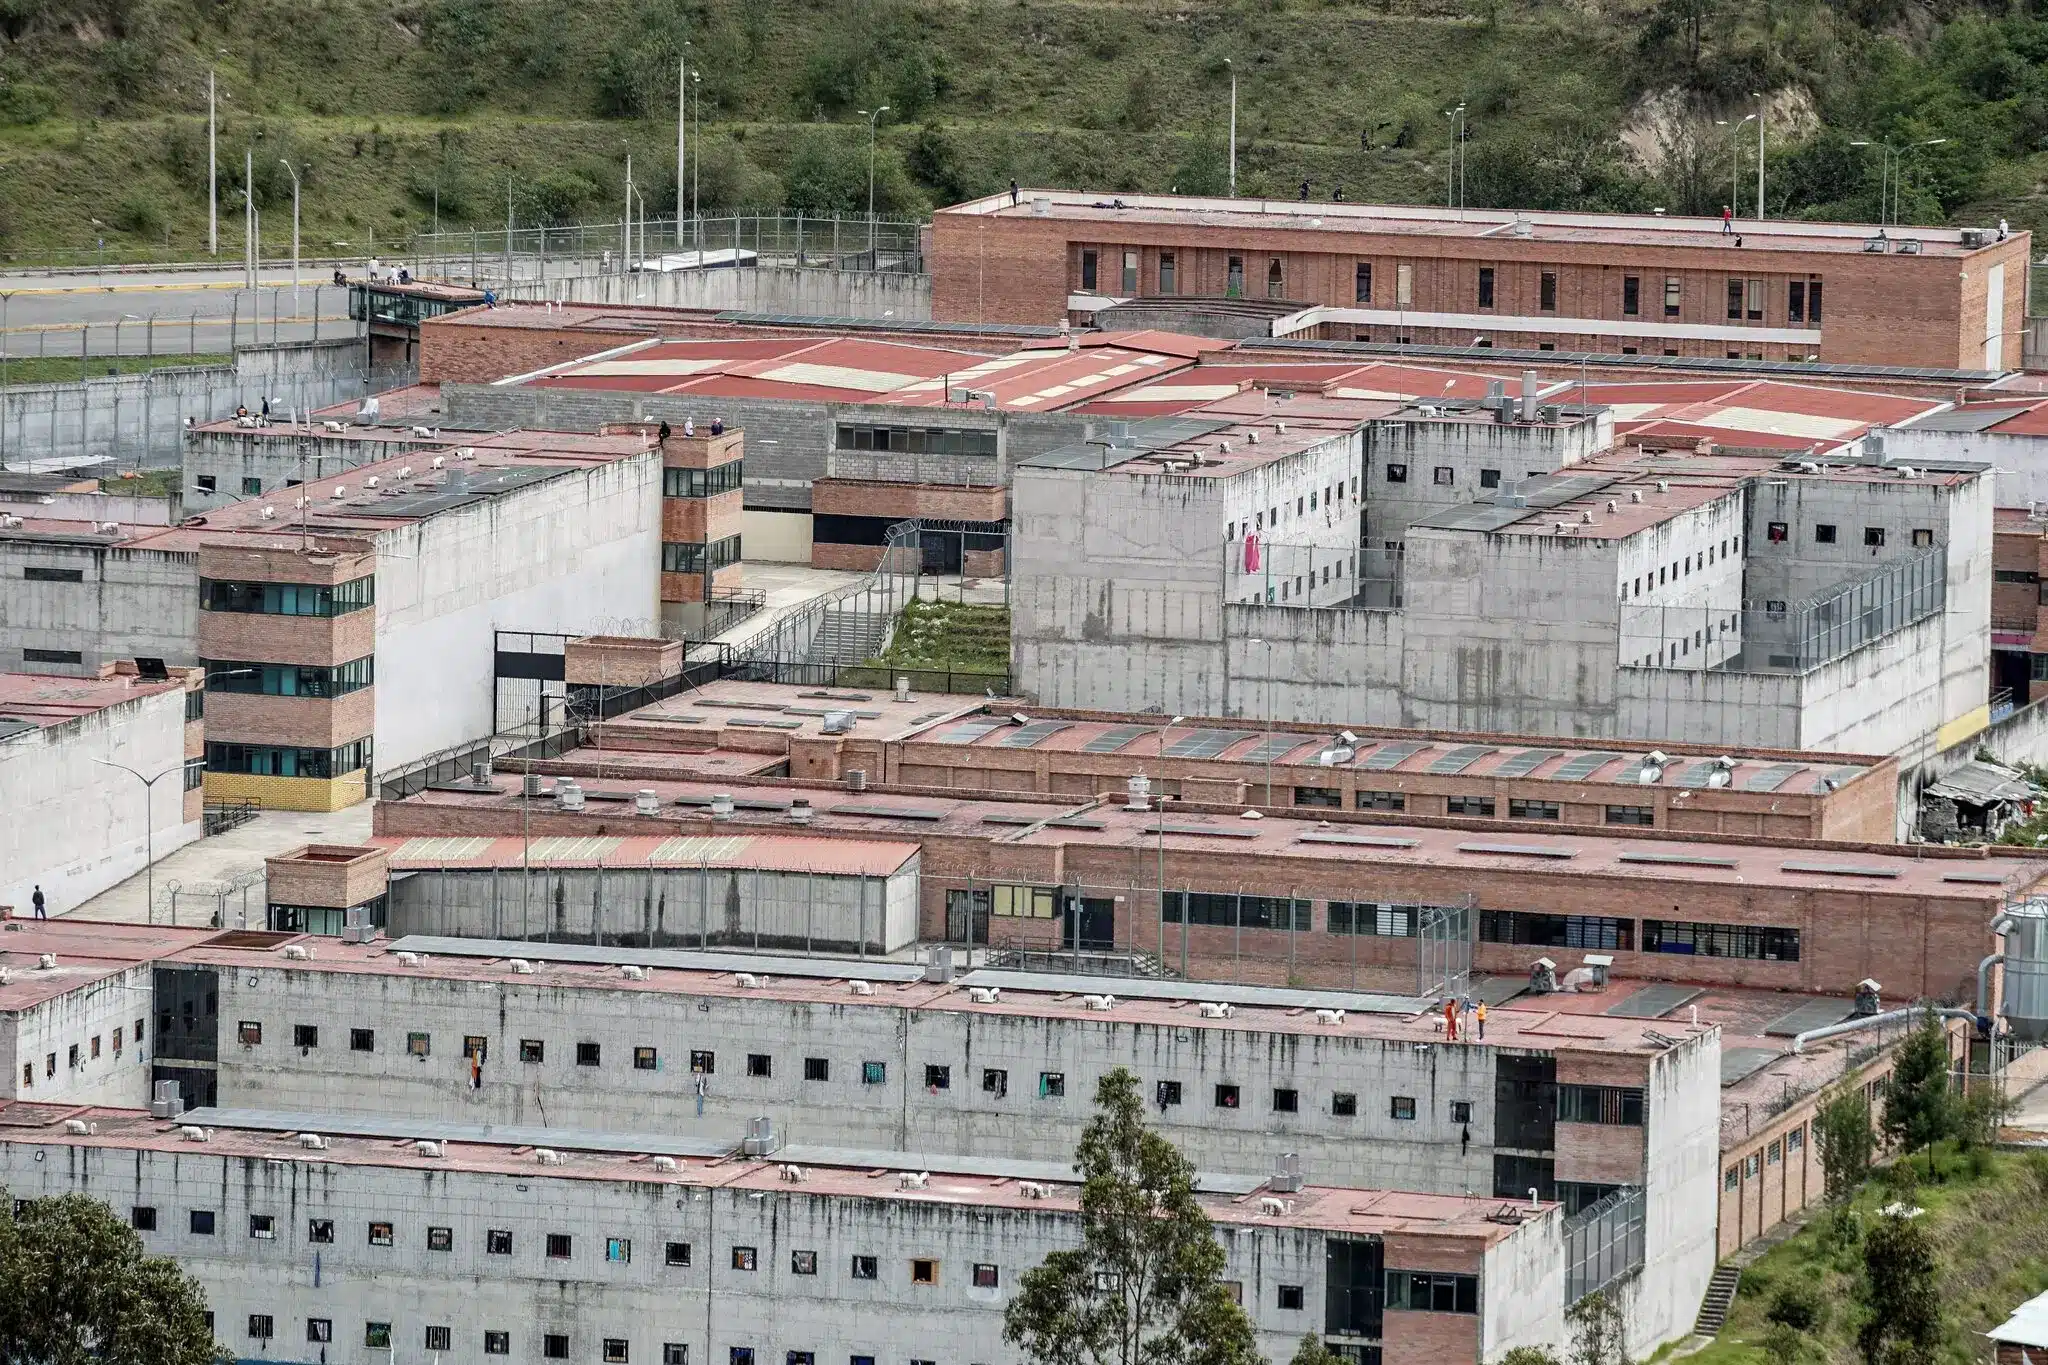 Turi prison in Cuenca, Ecuador.